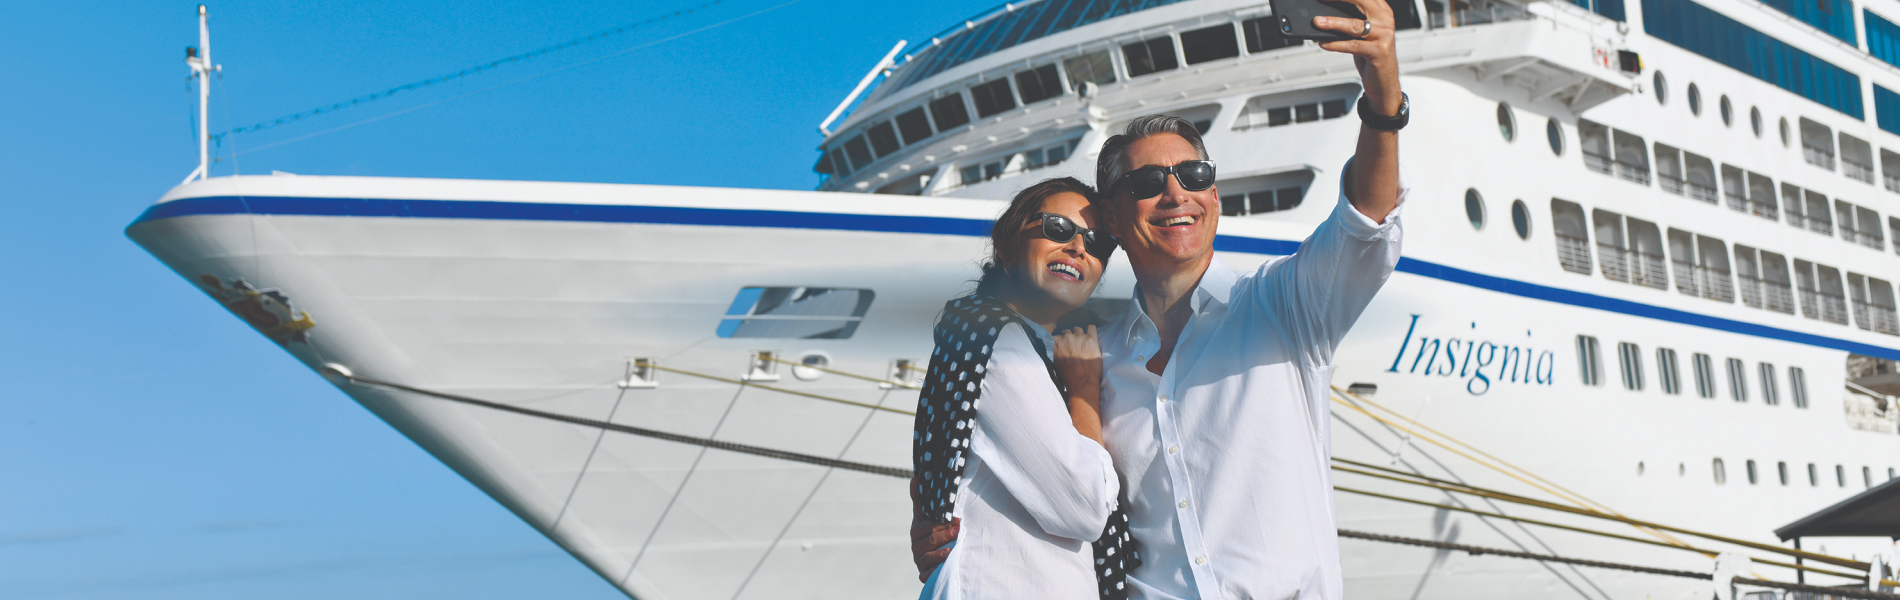 Oceania Cruises RCI cruise exchange program